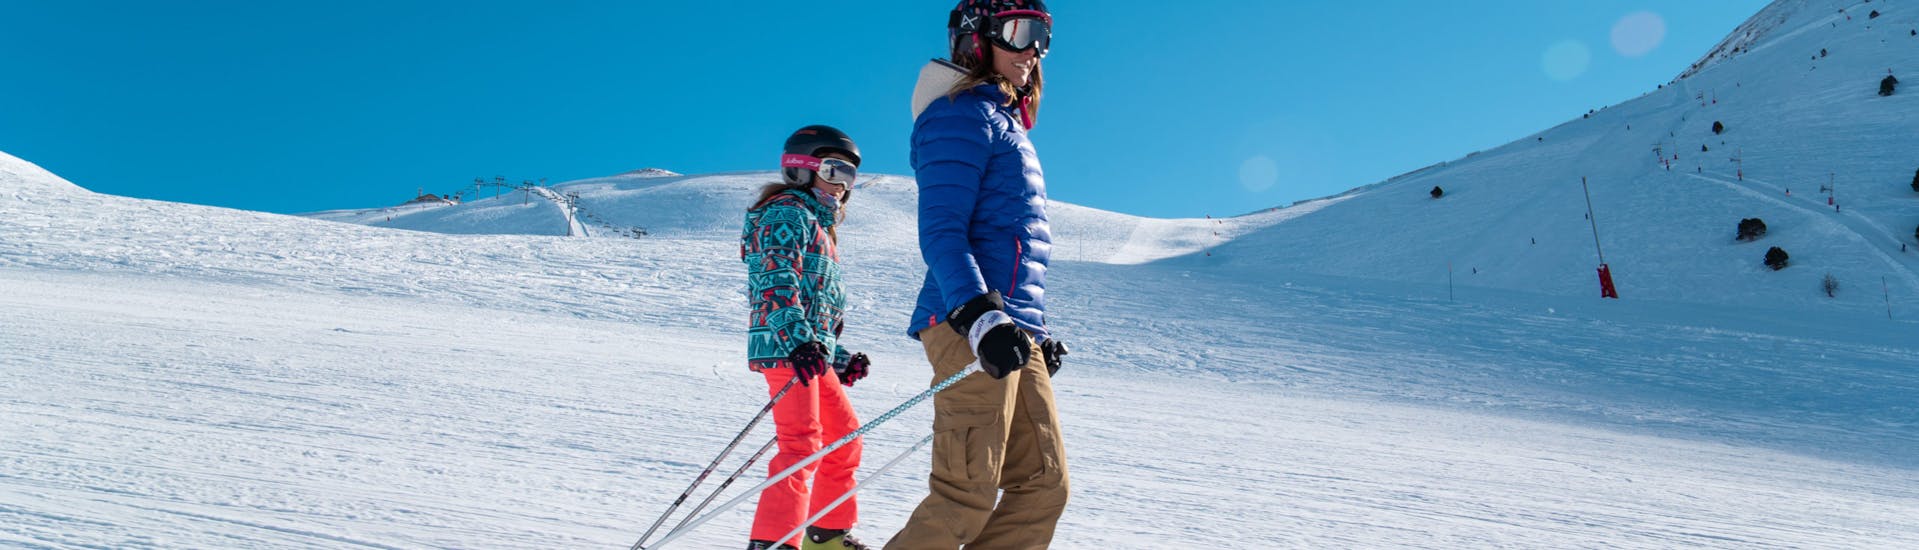 Clases de esquí para niños a partir de 5 años para principiantes con Evolution 2 Saint Lary Soulan.